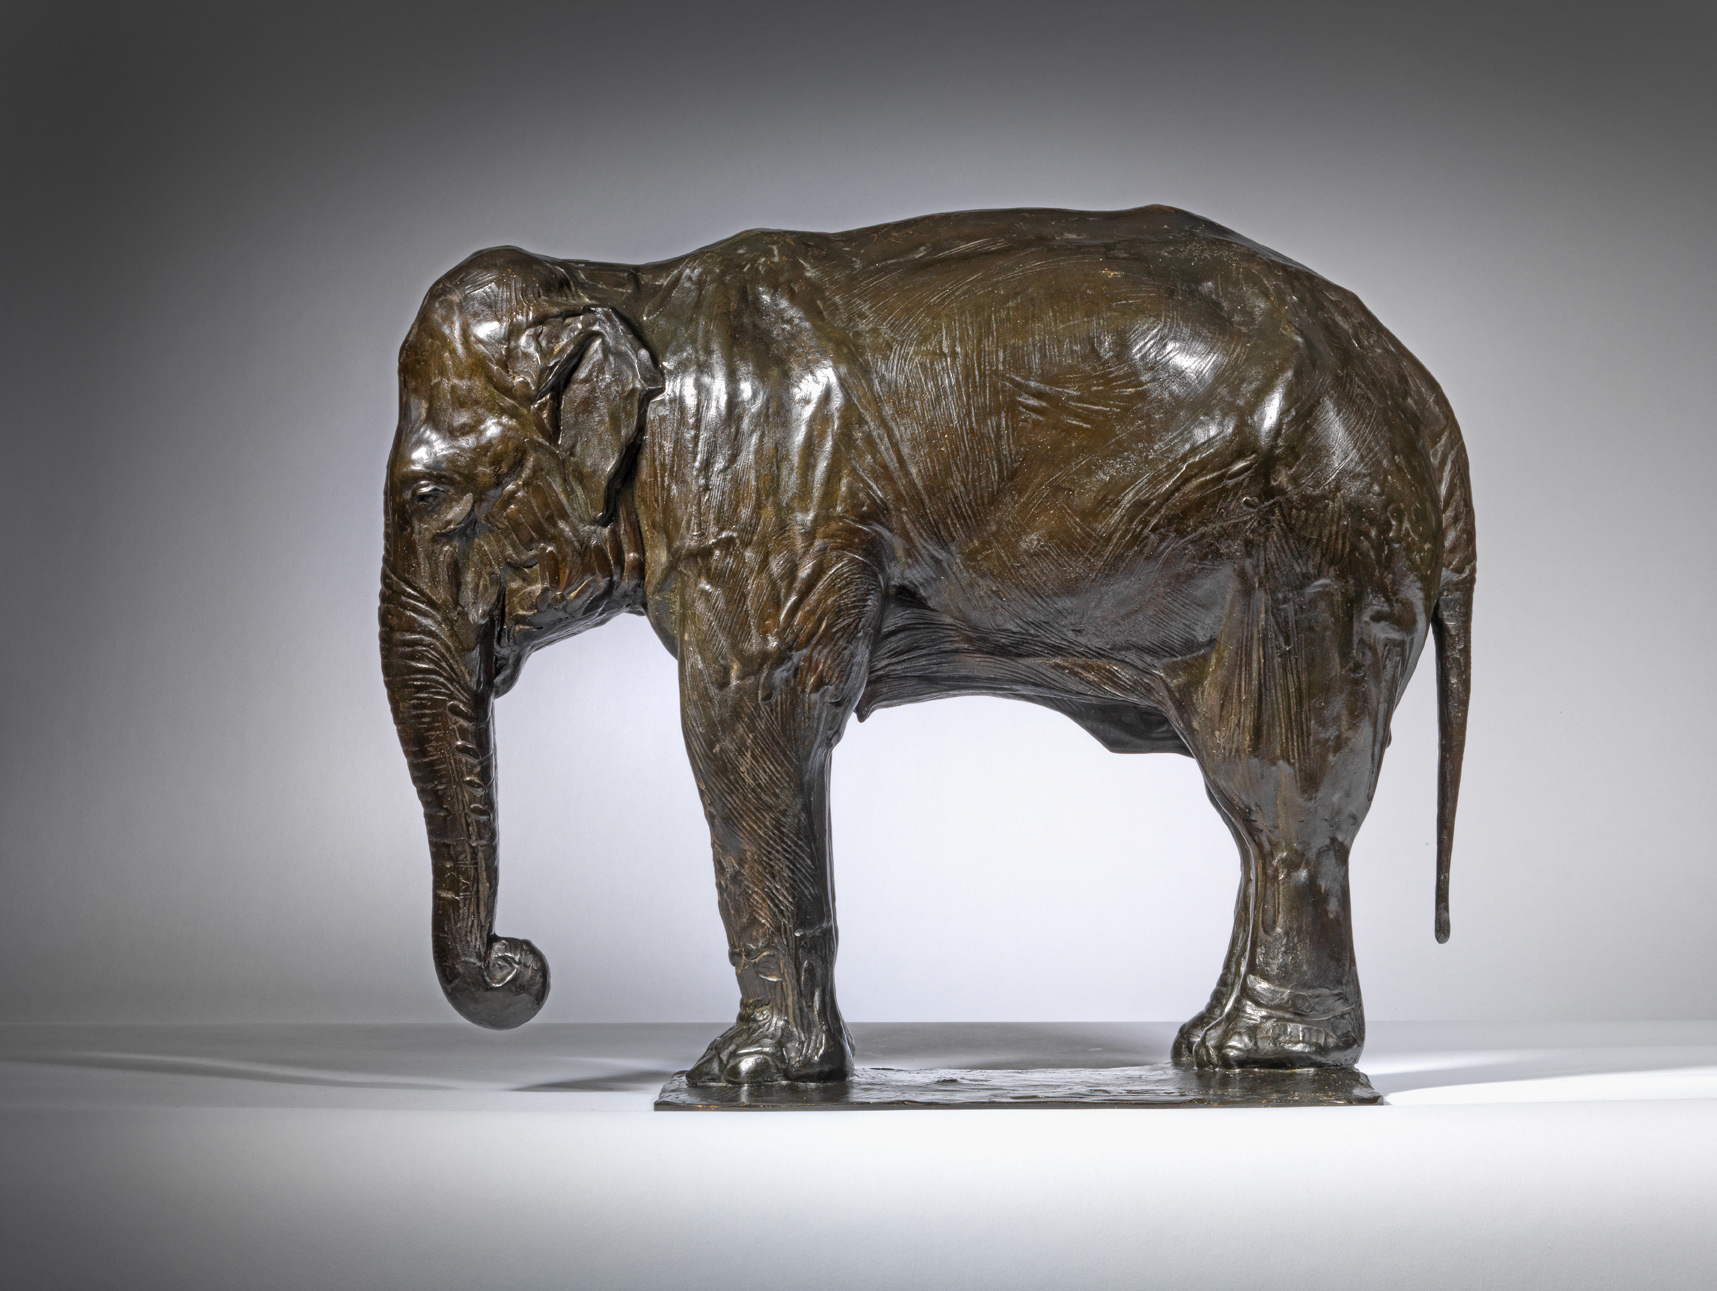 Elephant at Rest, 1909-1910